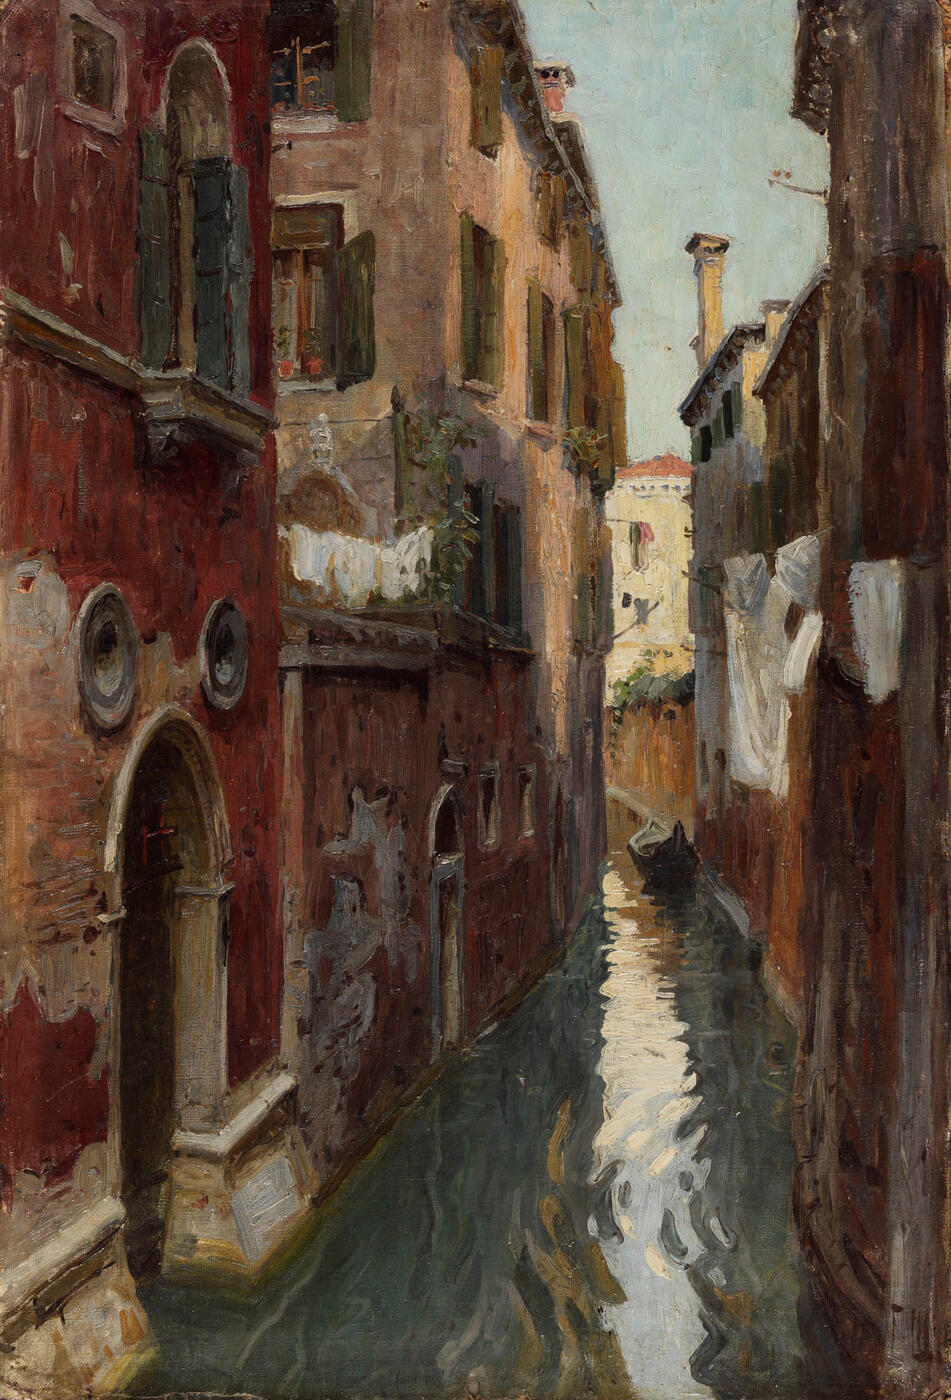 Venetian Canal